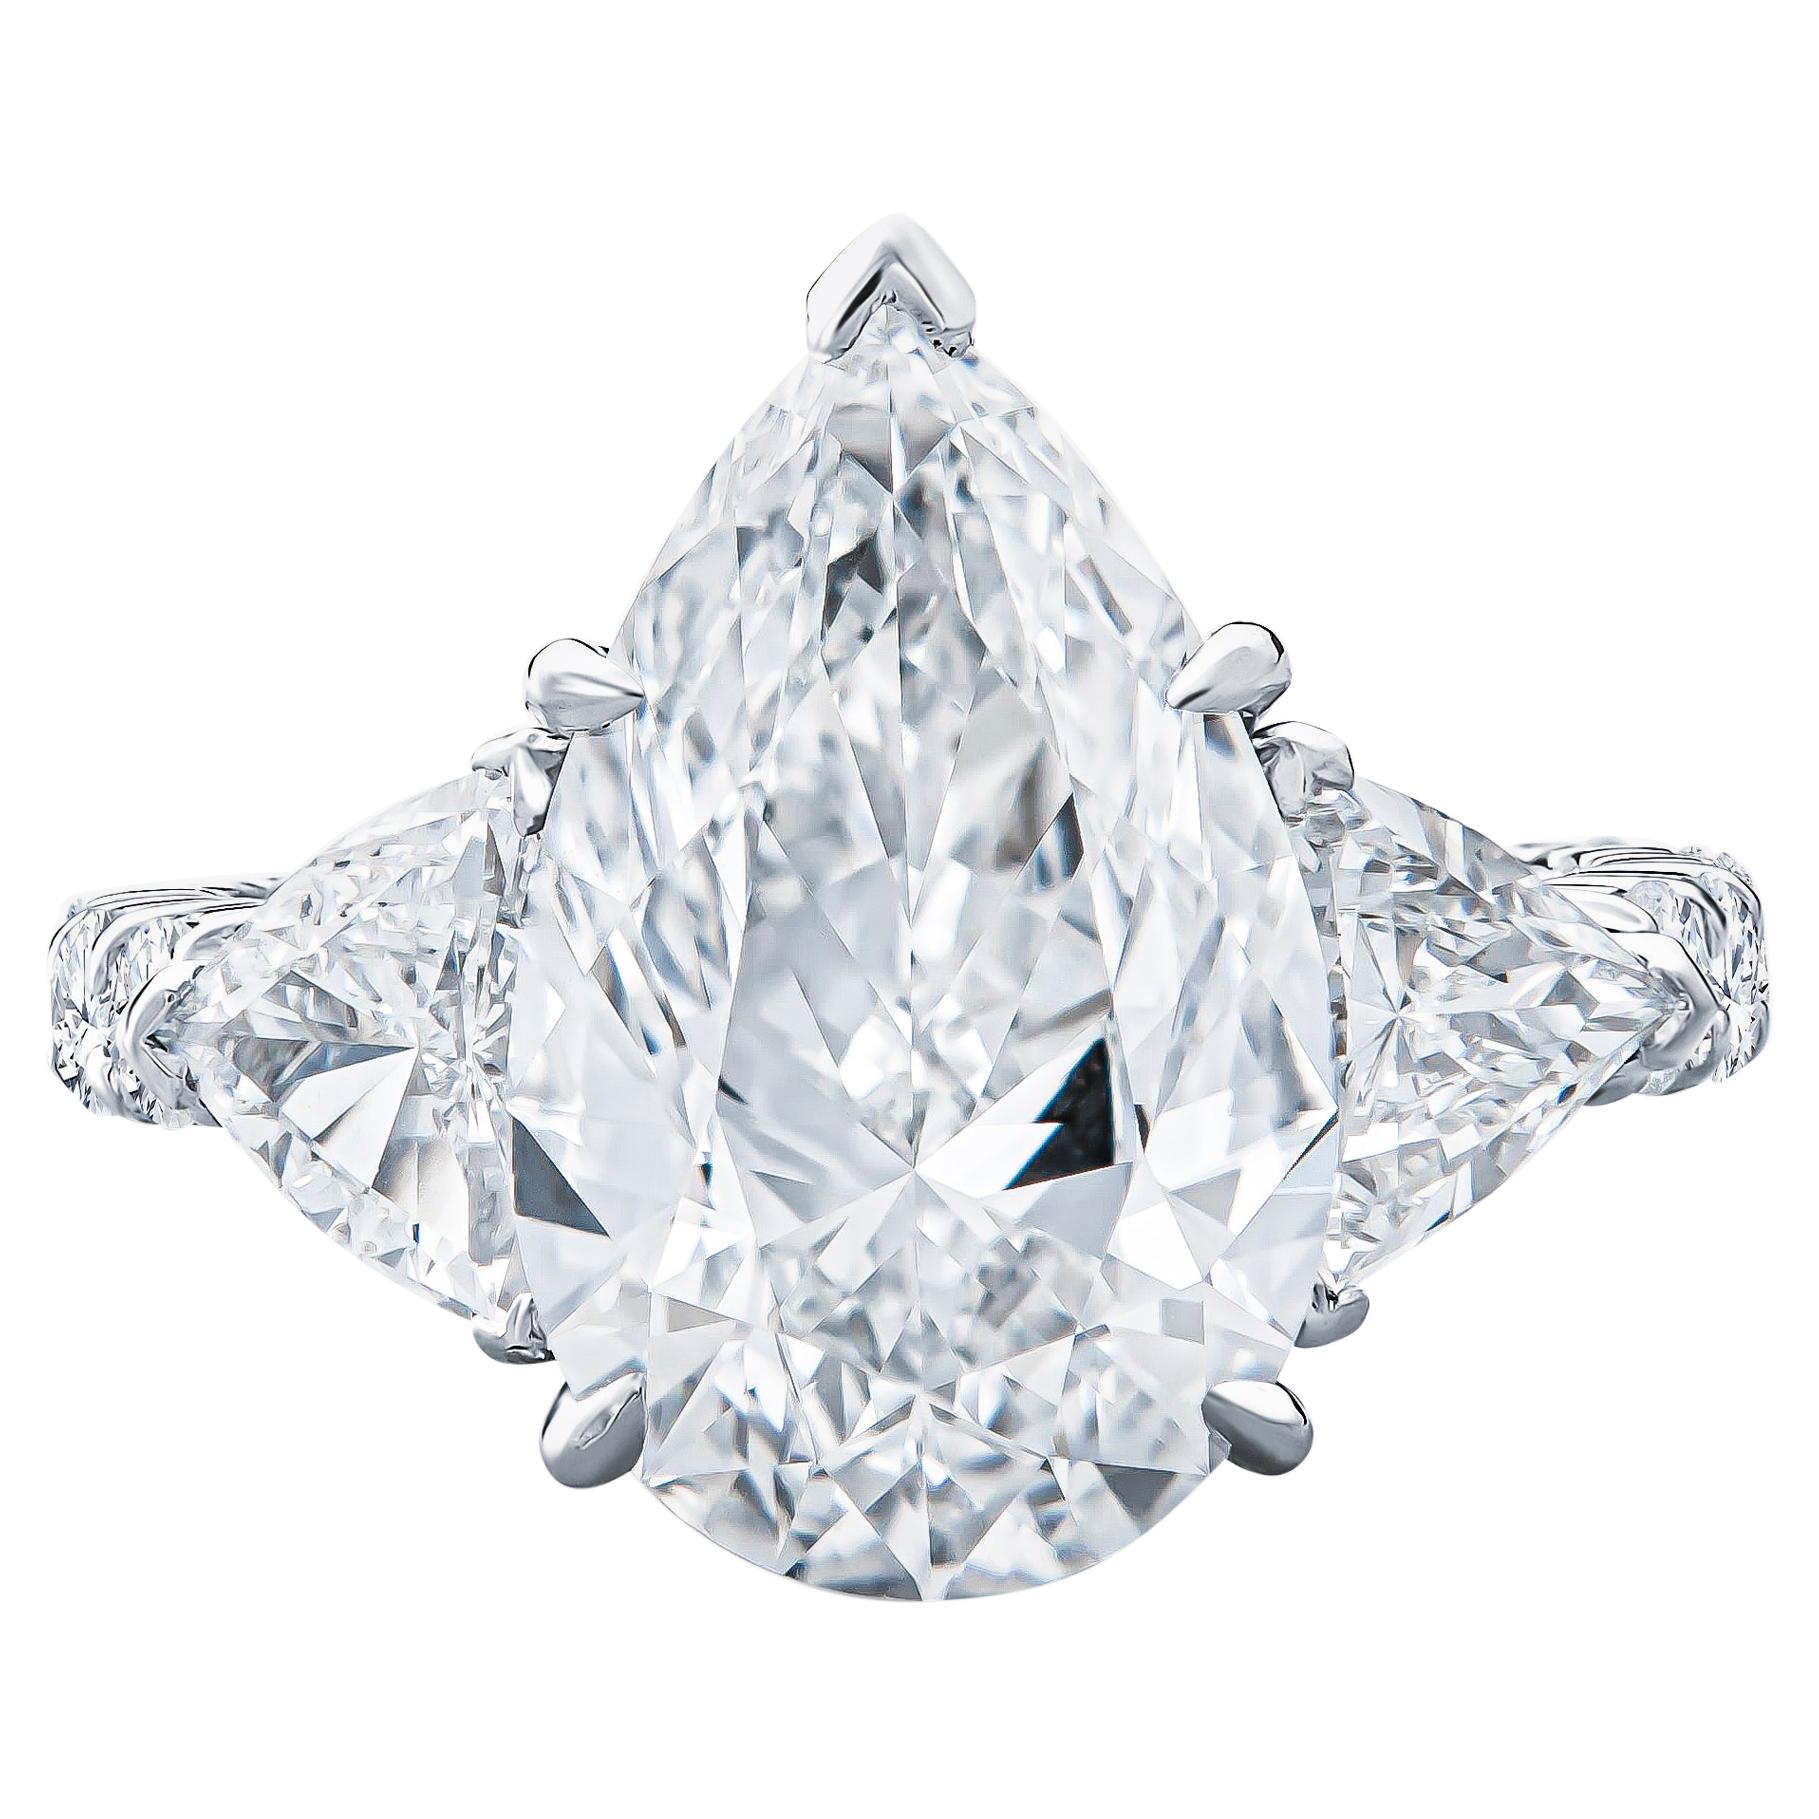 5.09 Carat Pear Shape Diamond D SI1 GIA Ring, 2.36 Carat Side Diamonds